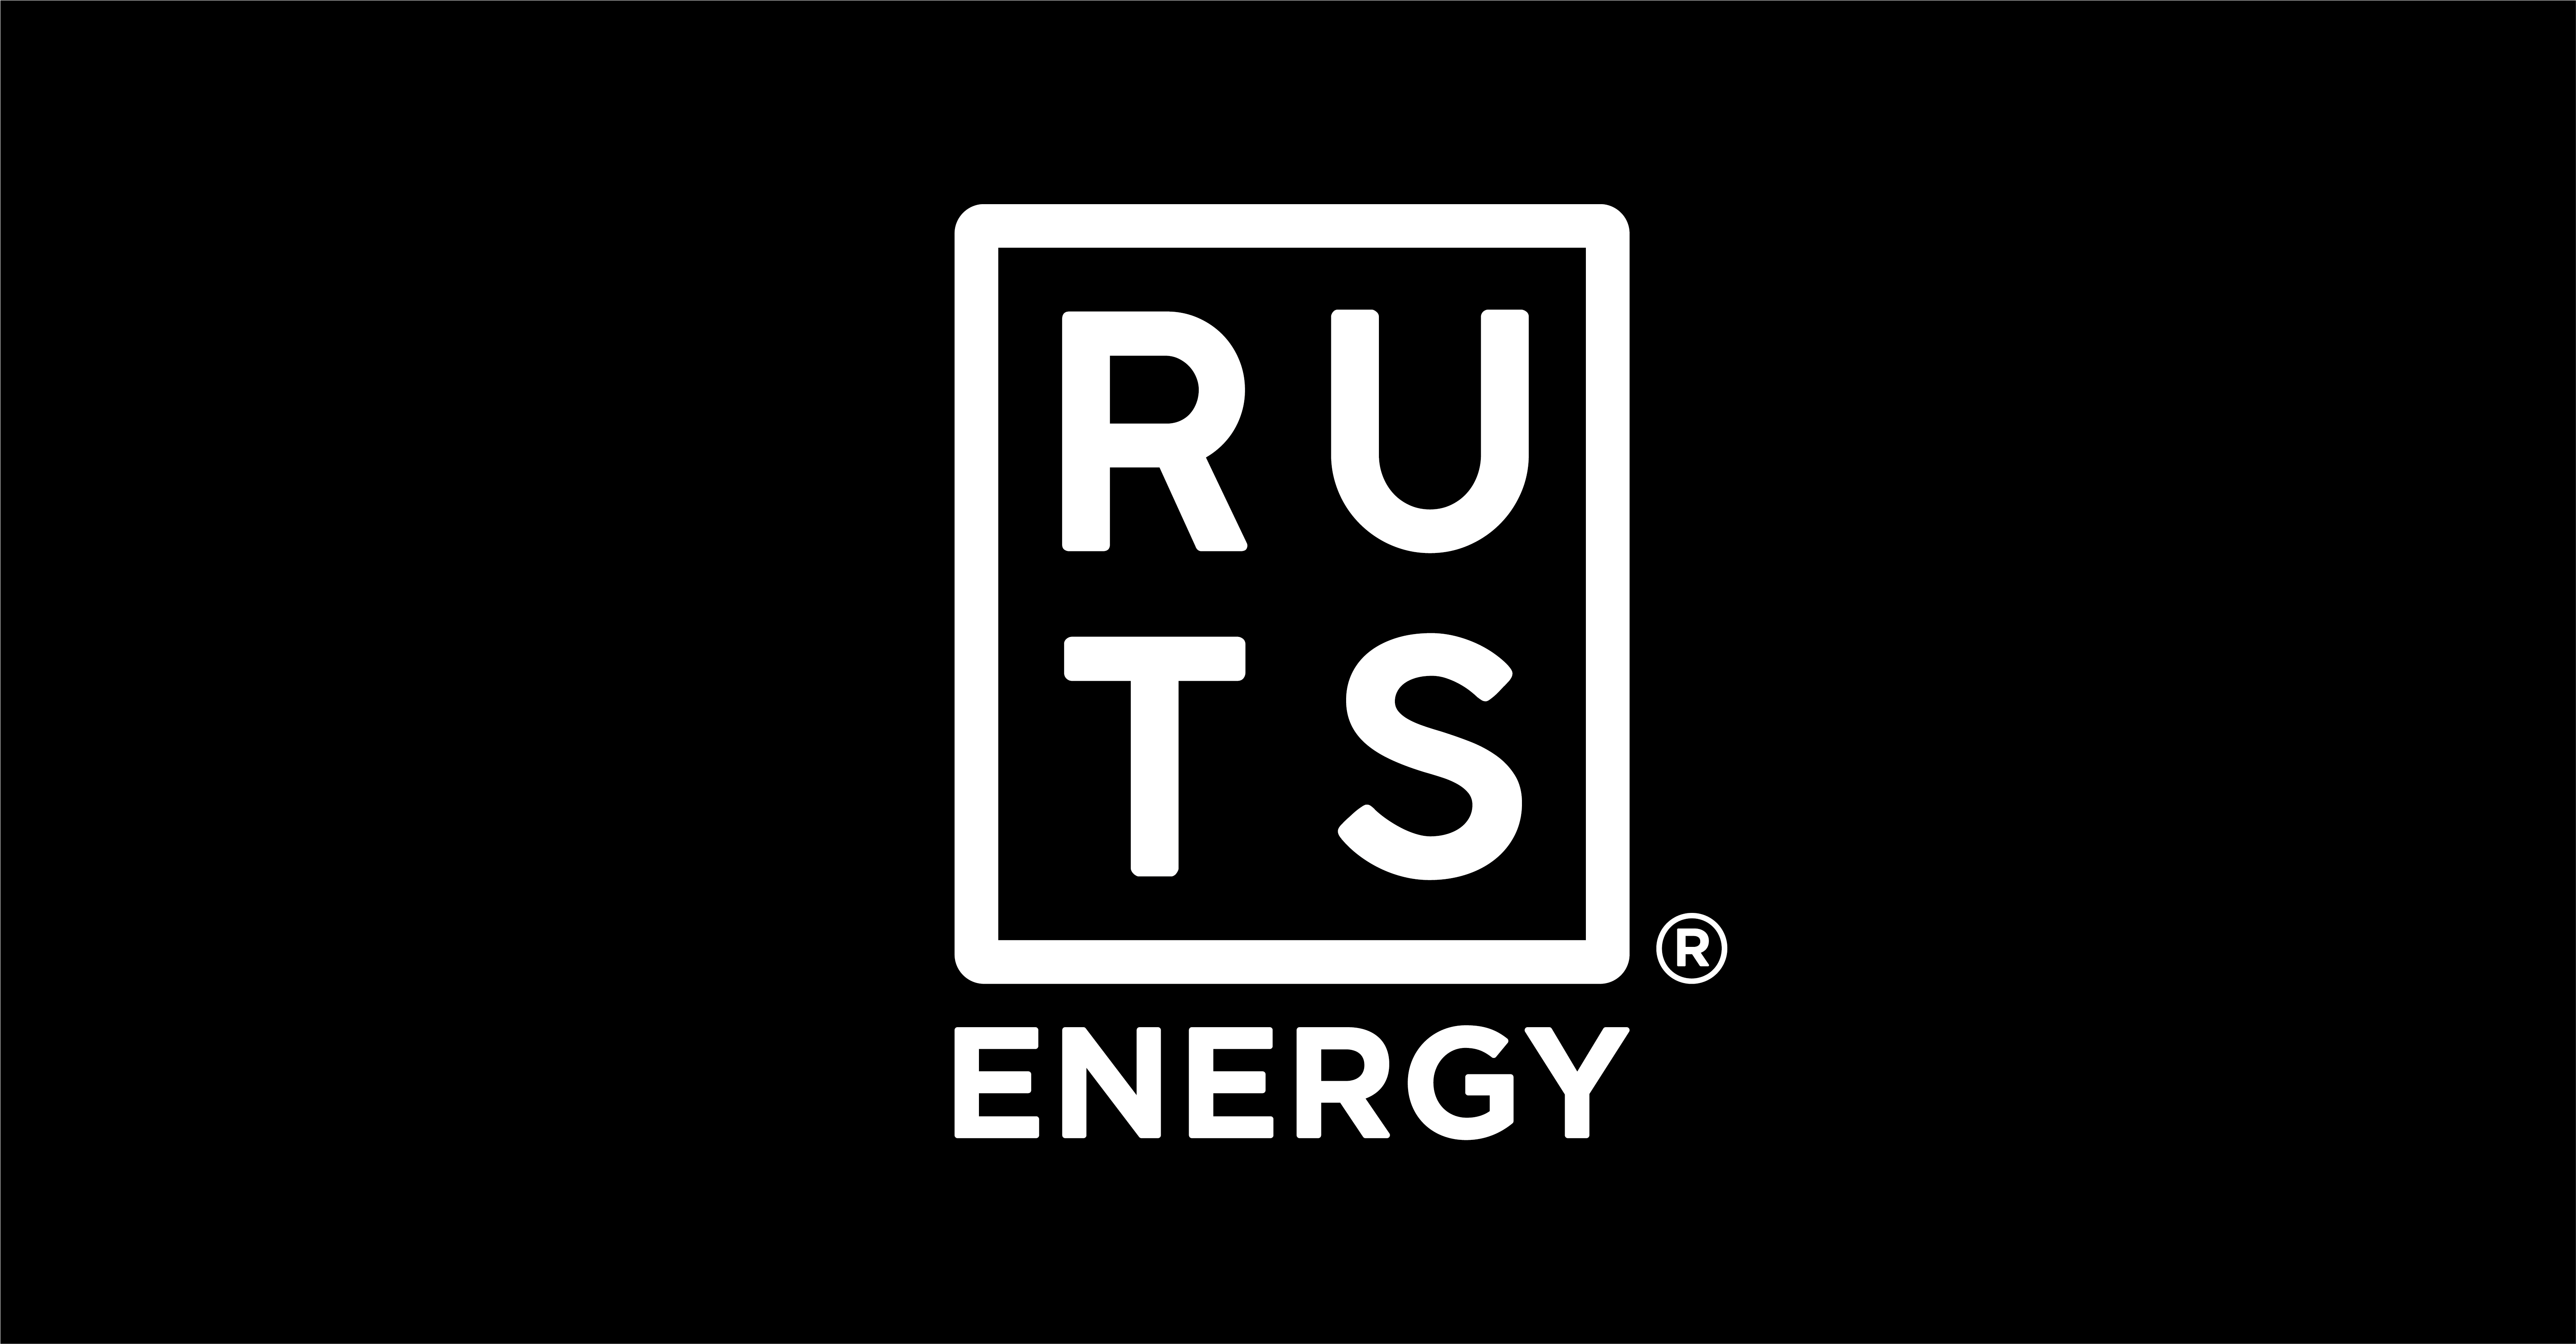 Ruts energy